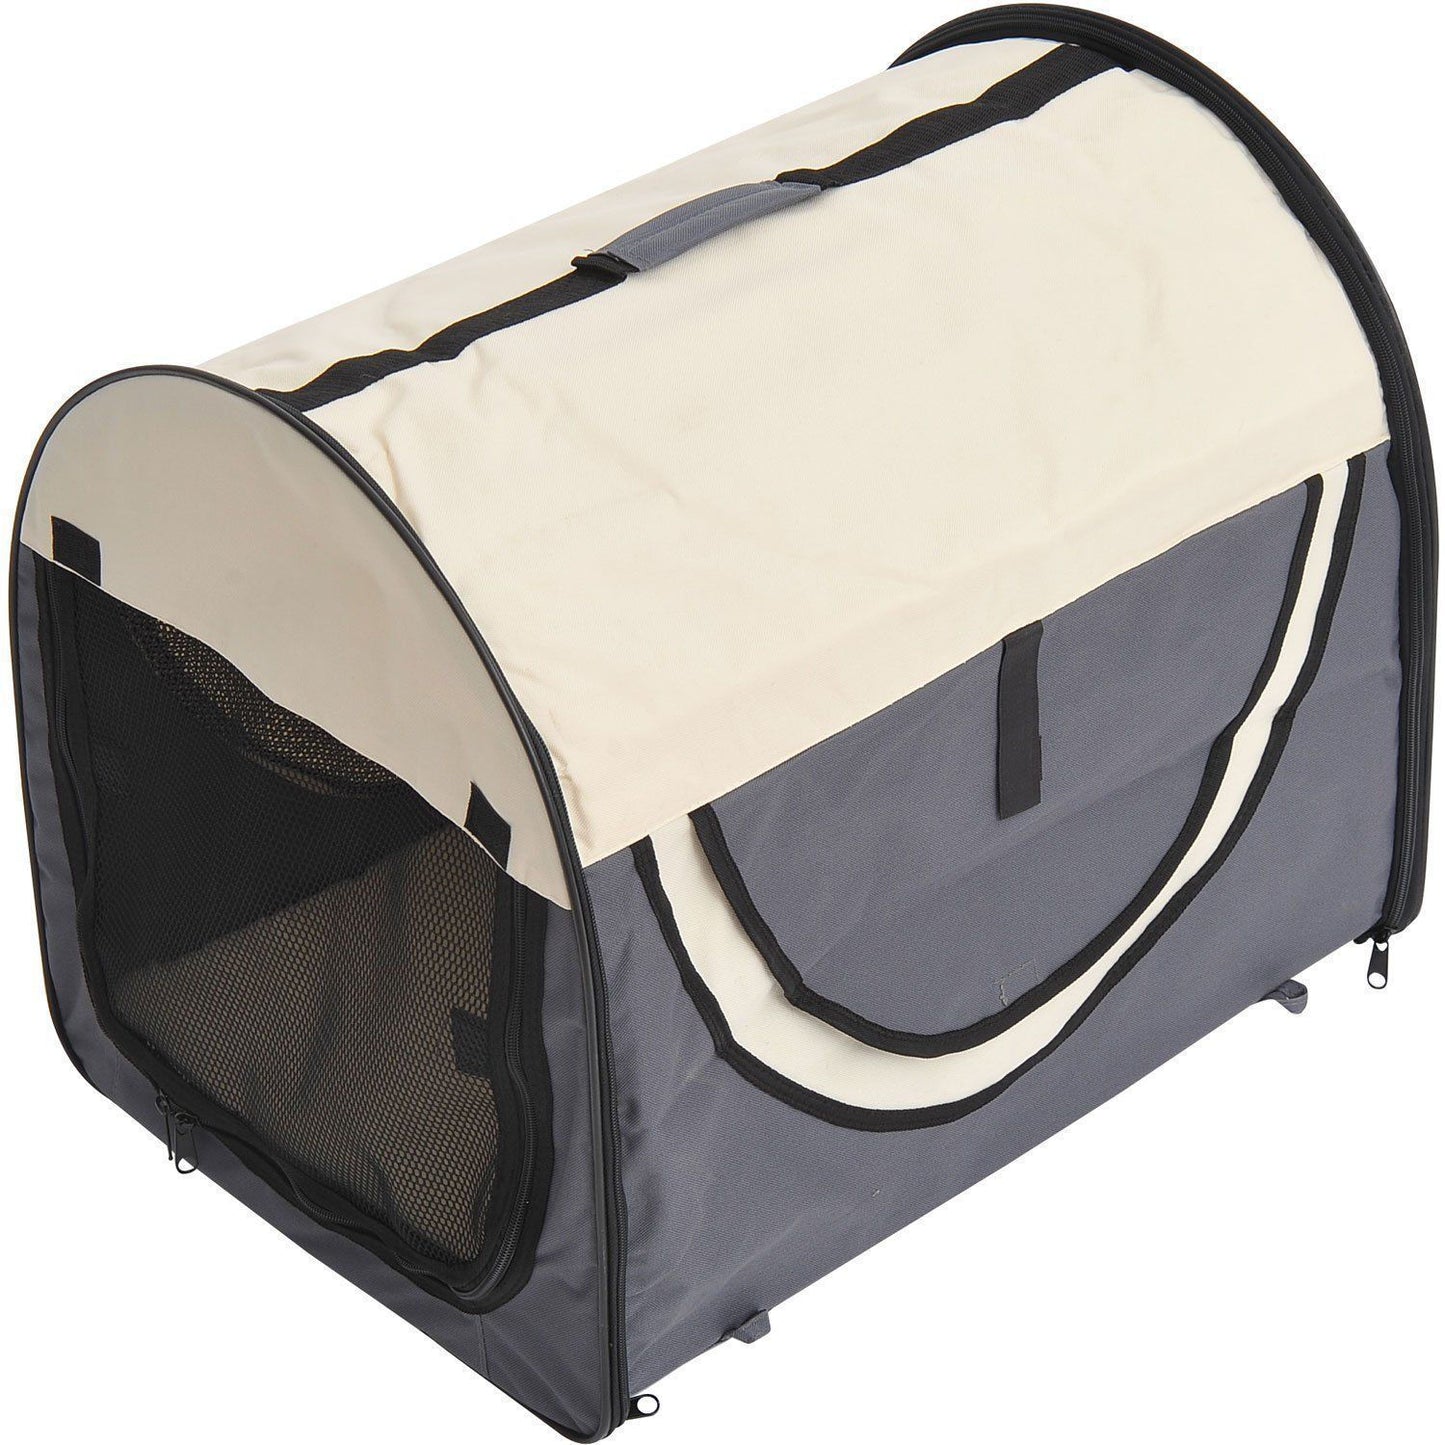 Nancy's Wellhouse Dog Crate foldable cat transport box, travel bag for pets waterproof, 46cm long